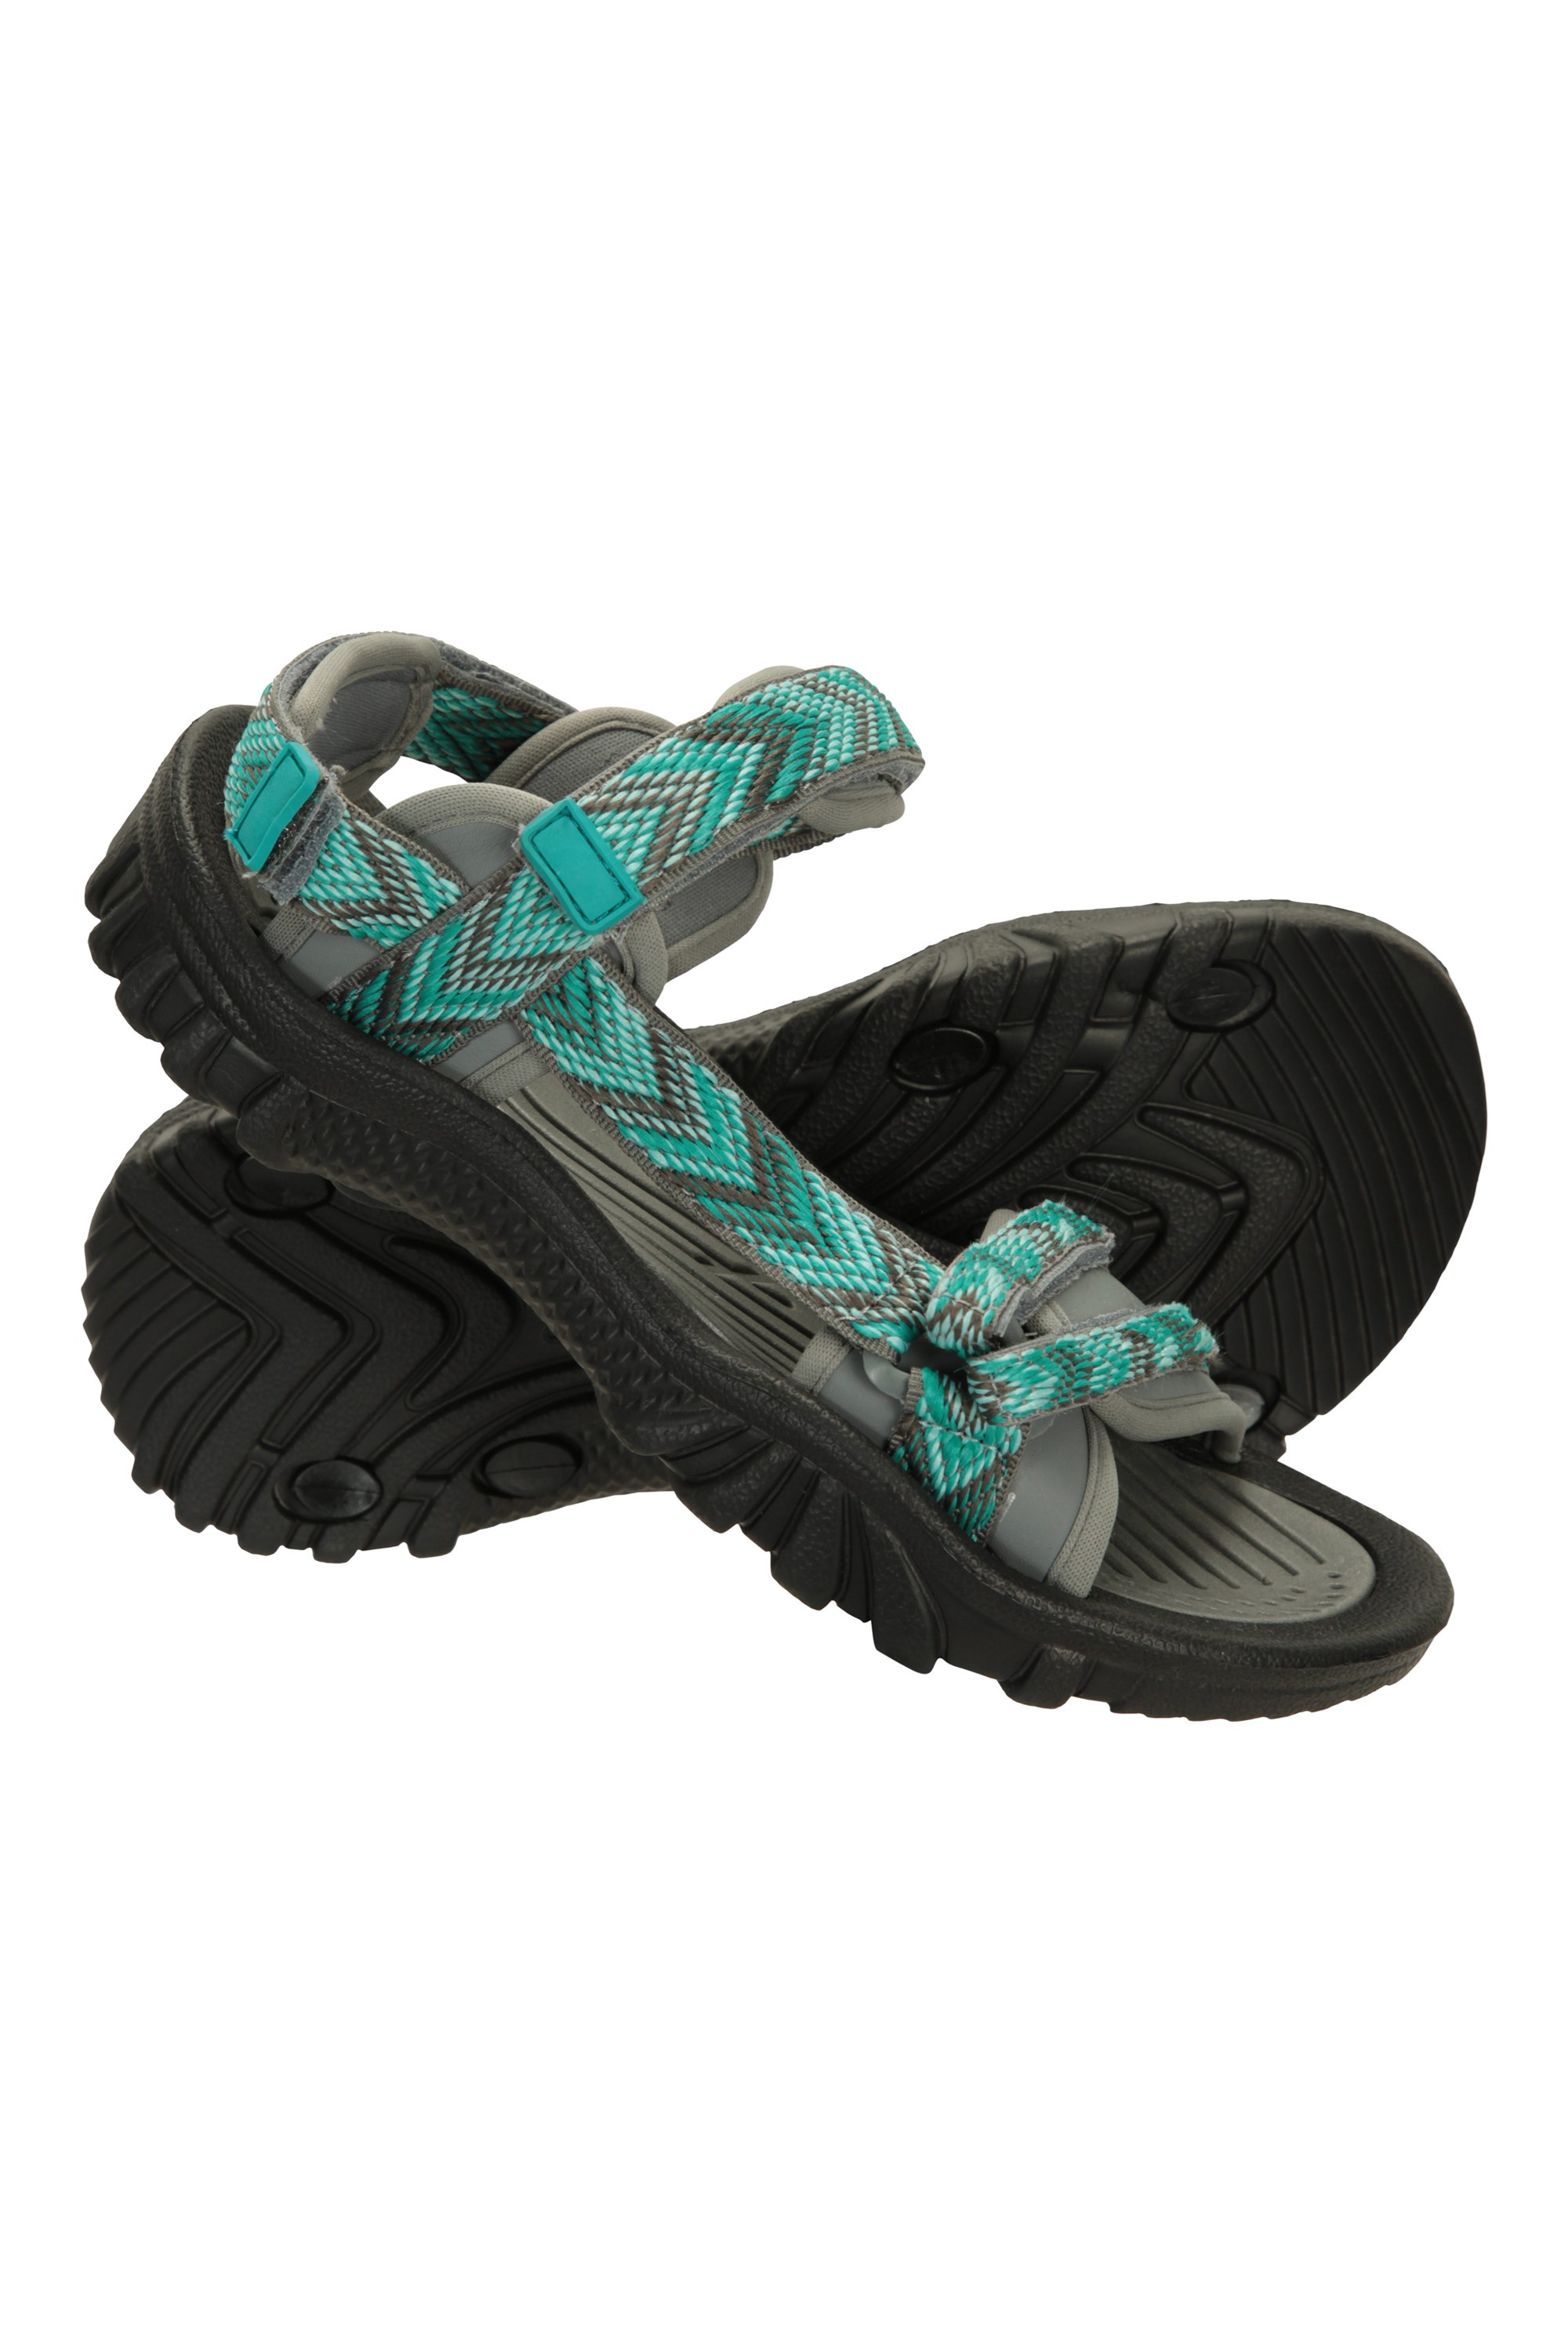 mountain warehouse womens sandals